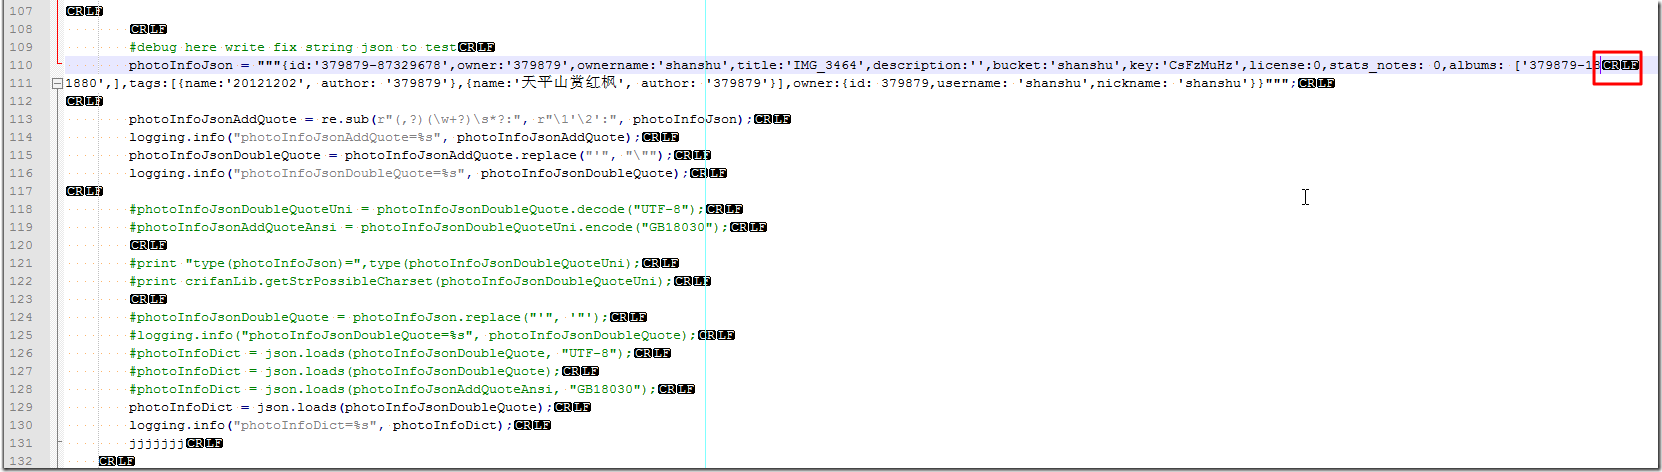 Json decoder jsondecodeerror. No json object could be Decoded. Json.loads(String_1). Отправляется json объект вместо списка. Описание ключей json в табличке.